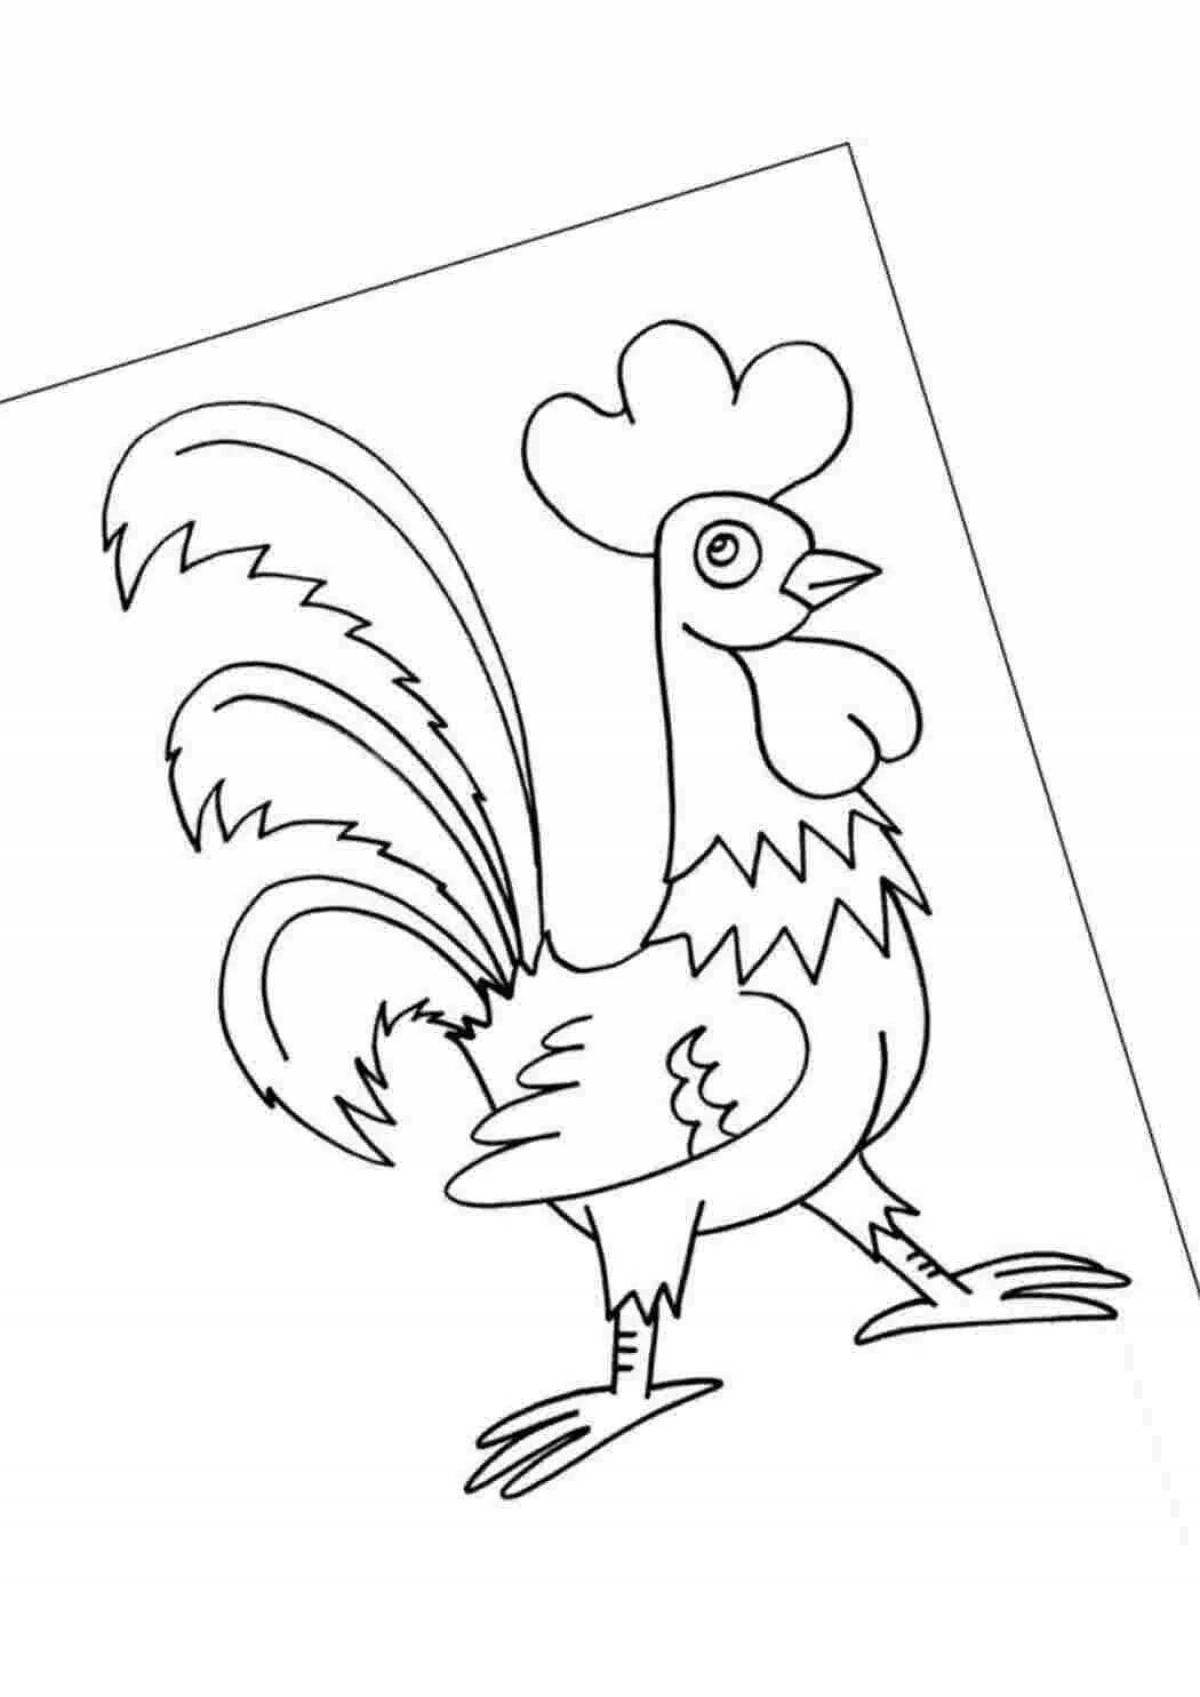 Majestic cockerel drawing